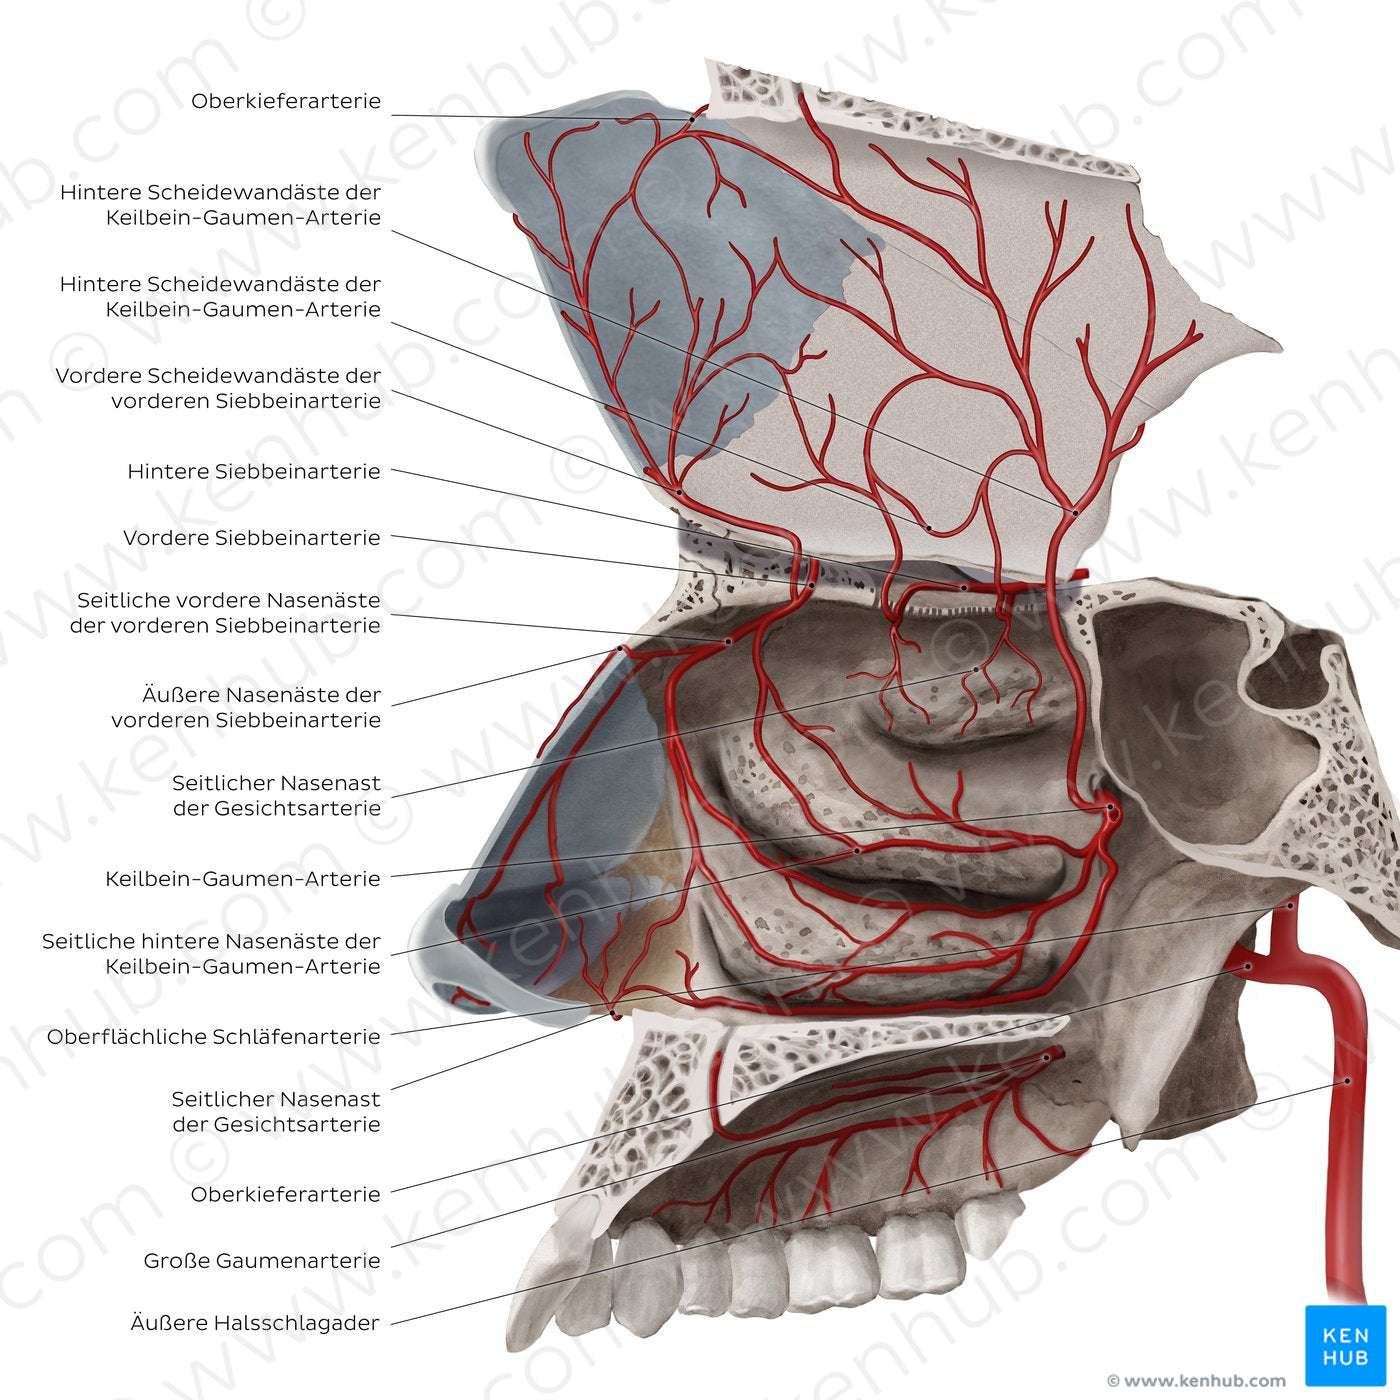 Arteries of the nasal cavity (German)